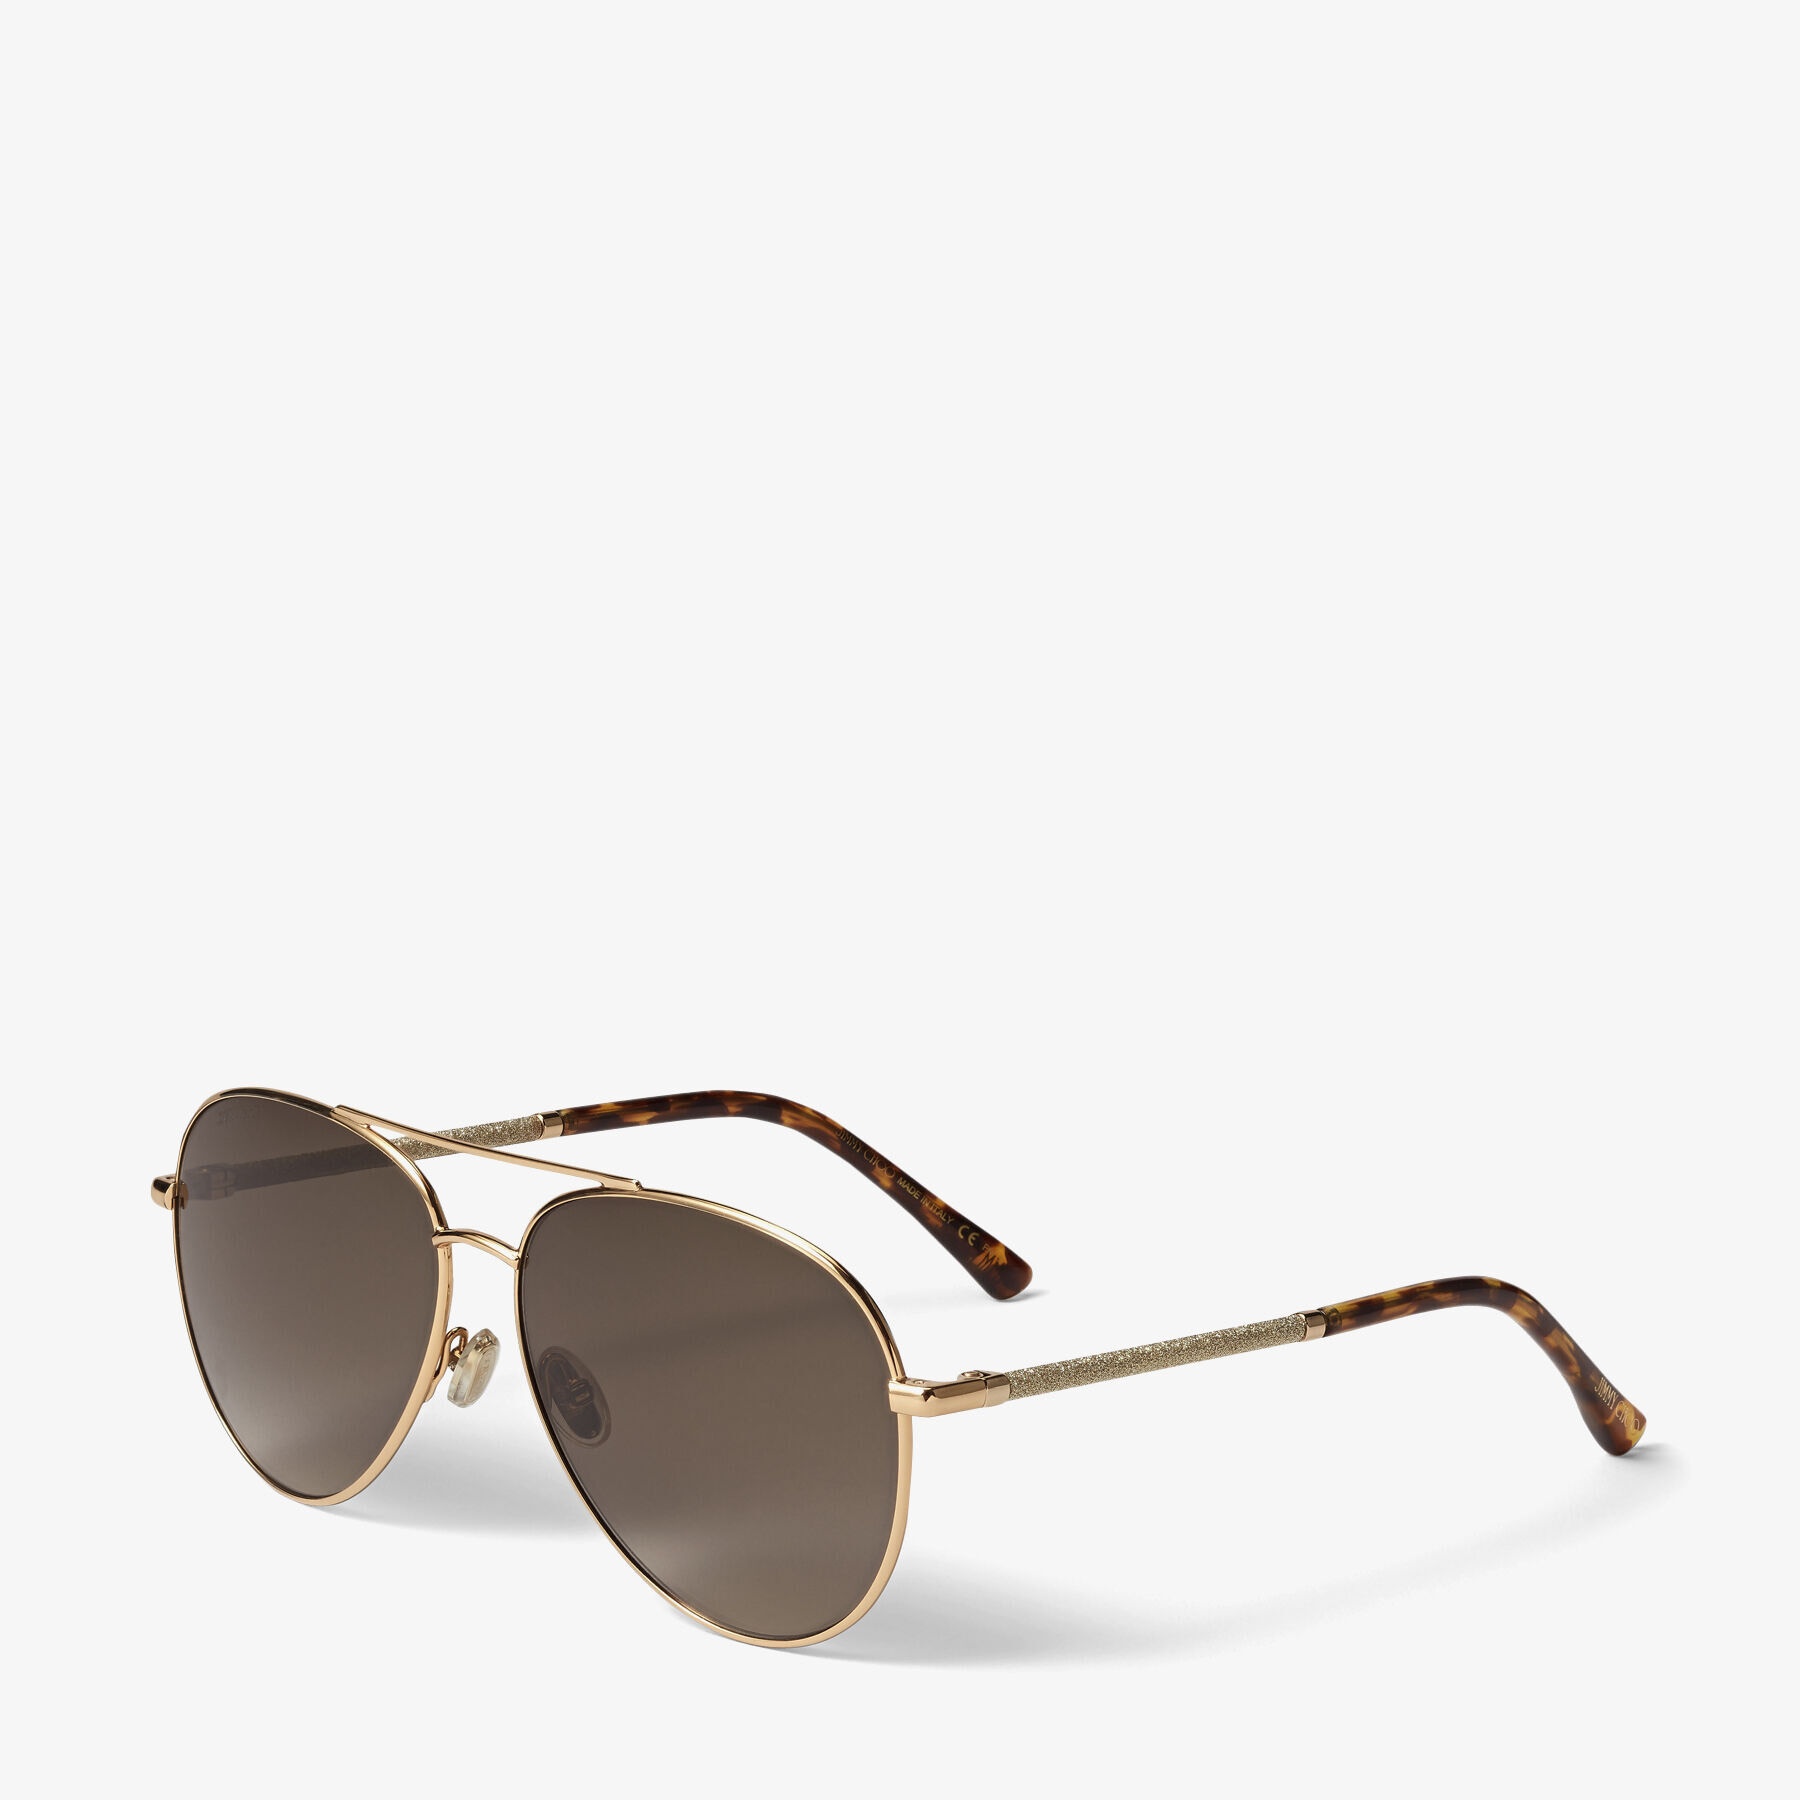 Devan
Gold Havana Aviator Sunglasses with Glitter - 3